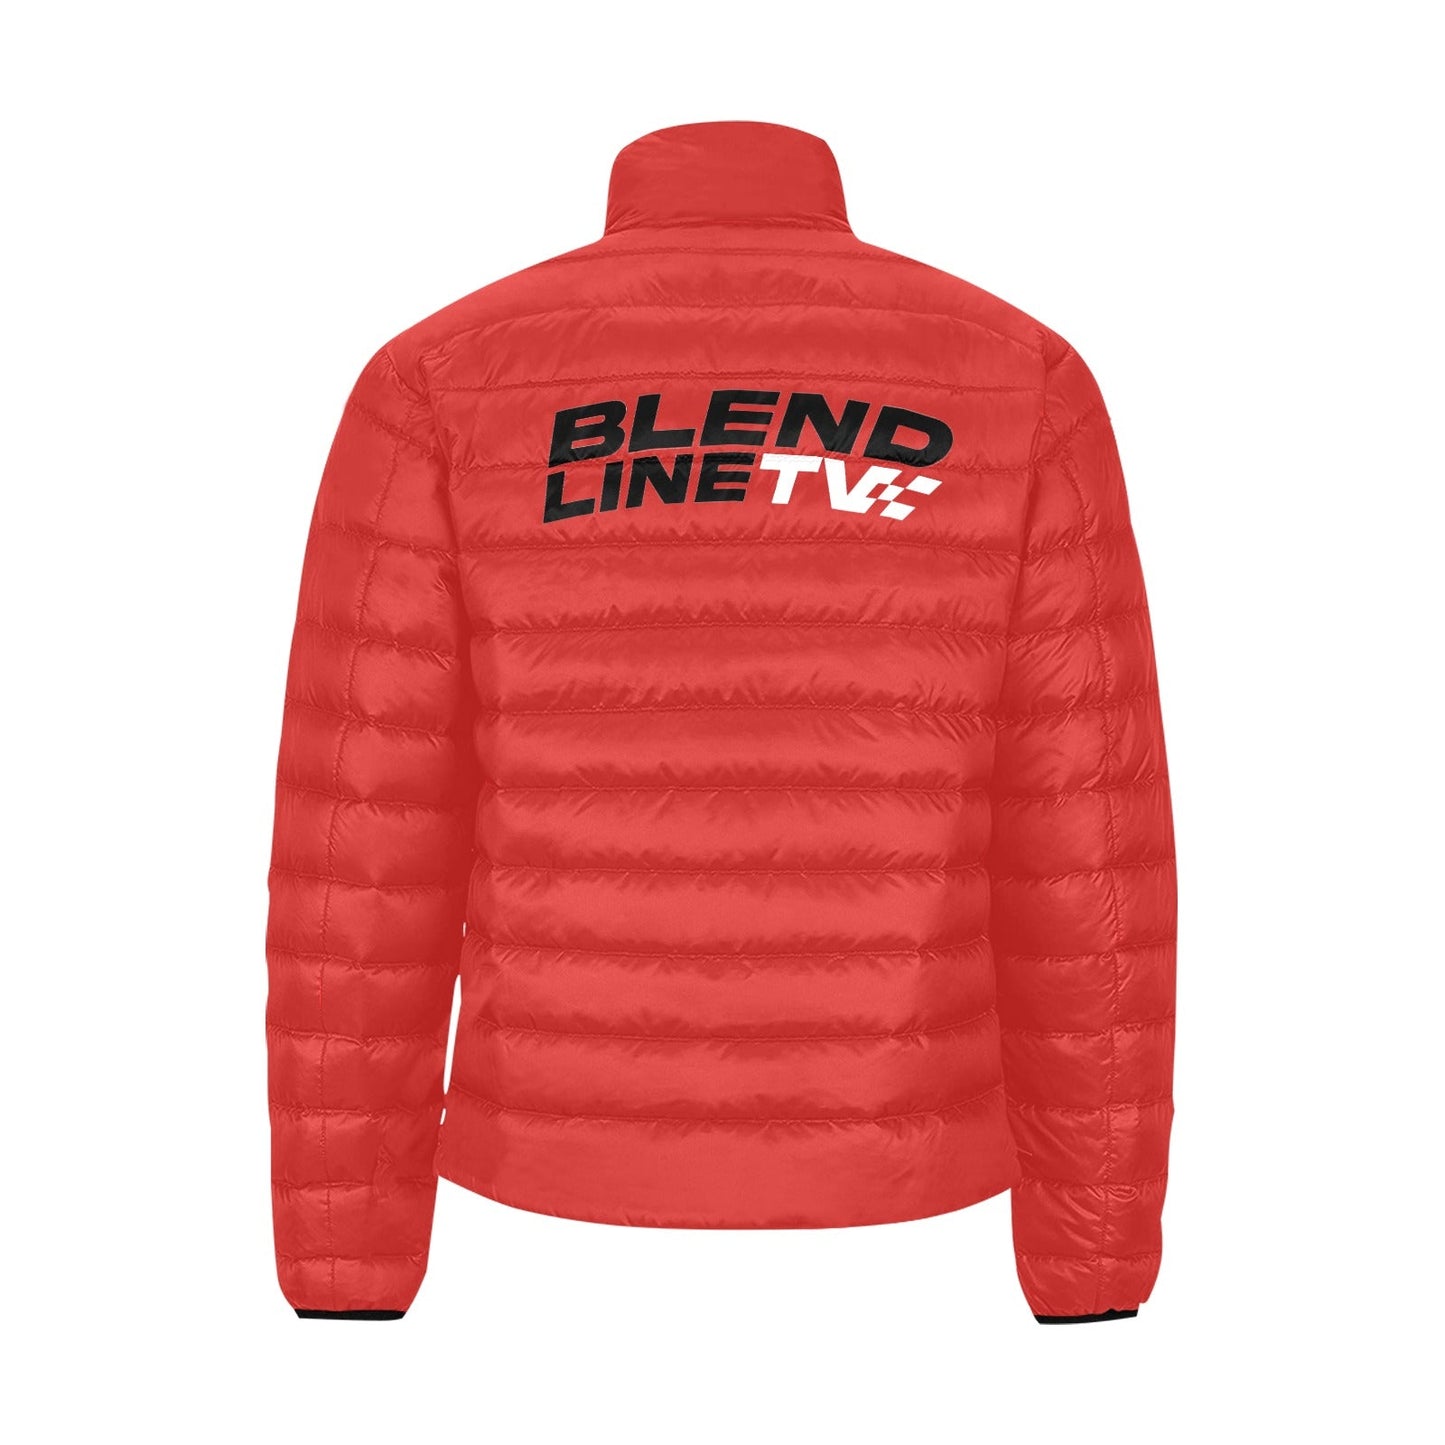 BLENDLINE TV quilted puffer jacket - red